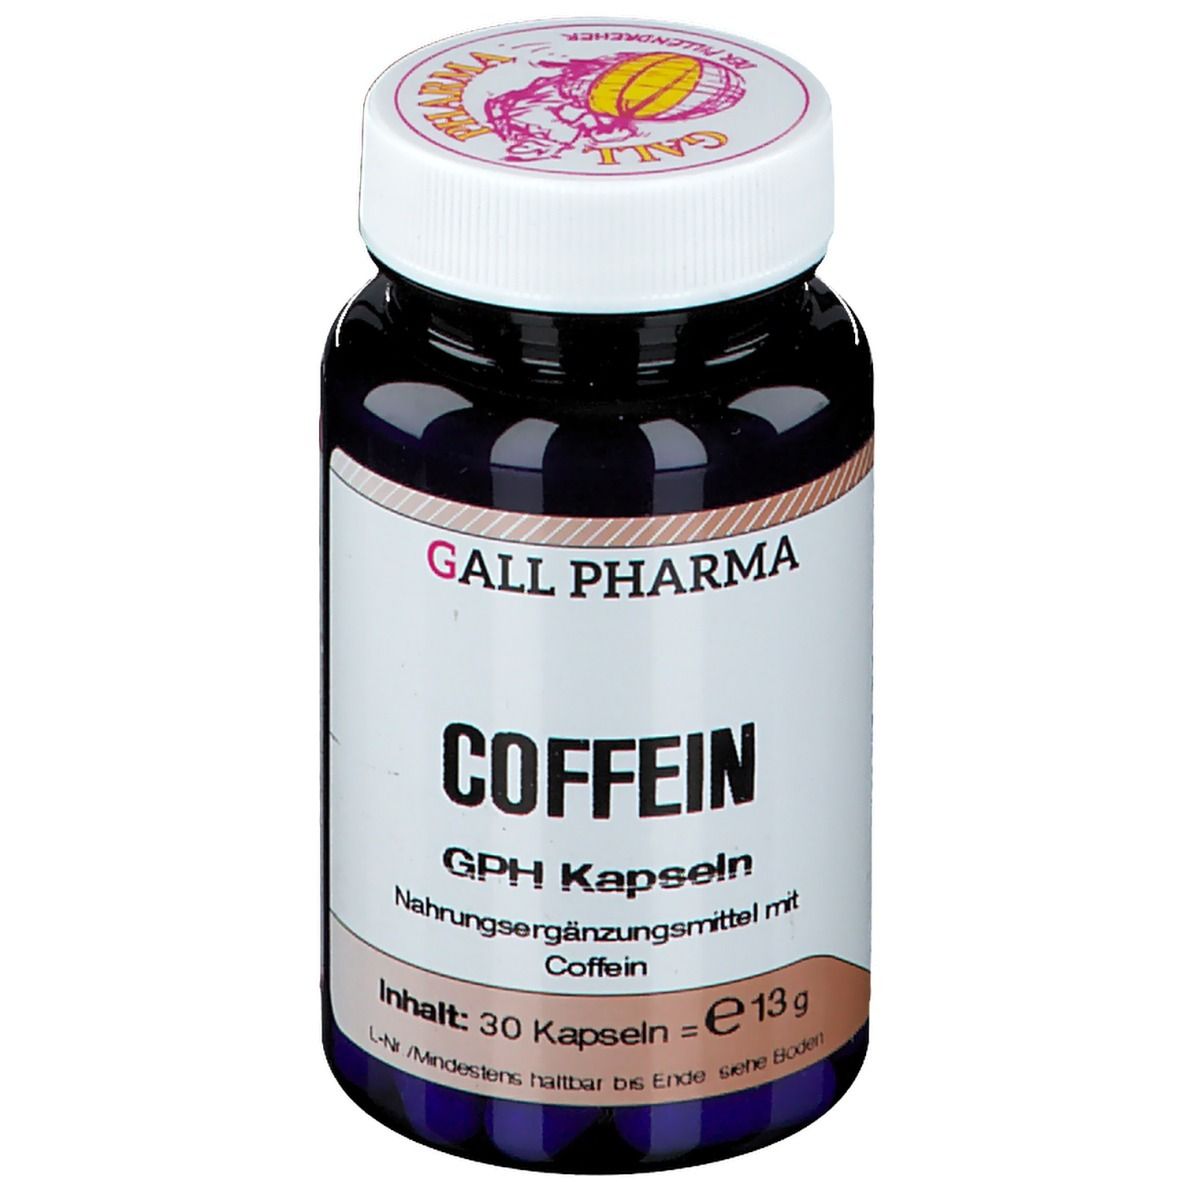 GALL PHARMA Coffein GPH Kapseln